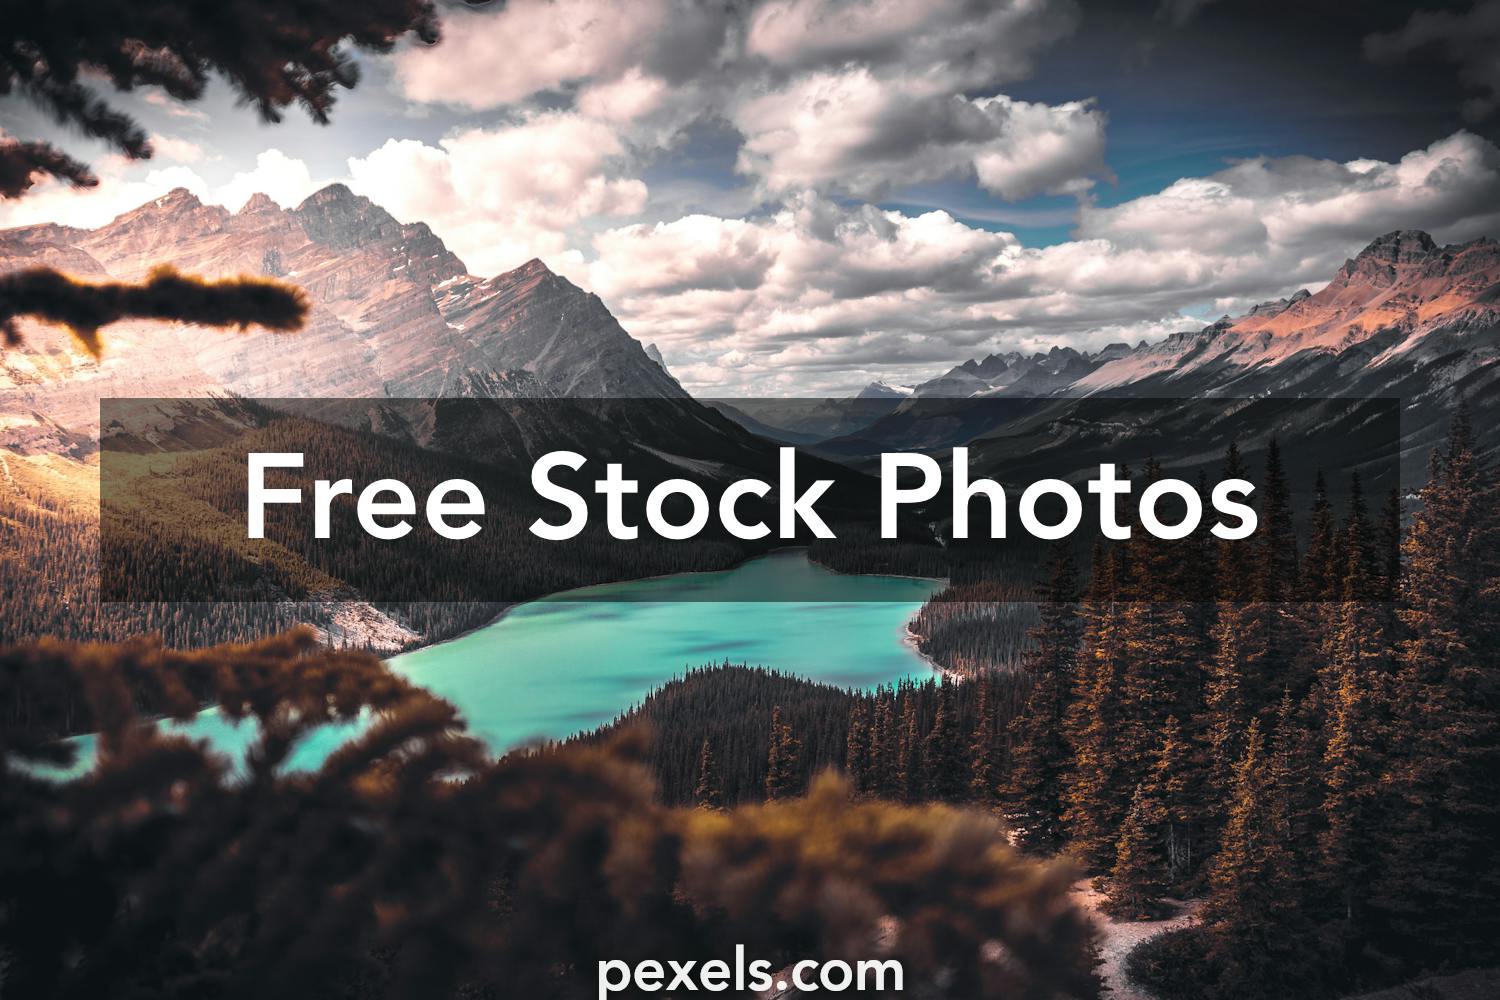 1000 Amazing Desktop Background Photos Pexels Free Stock Photos